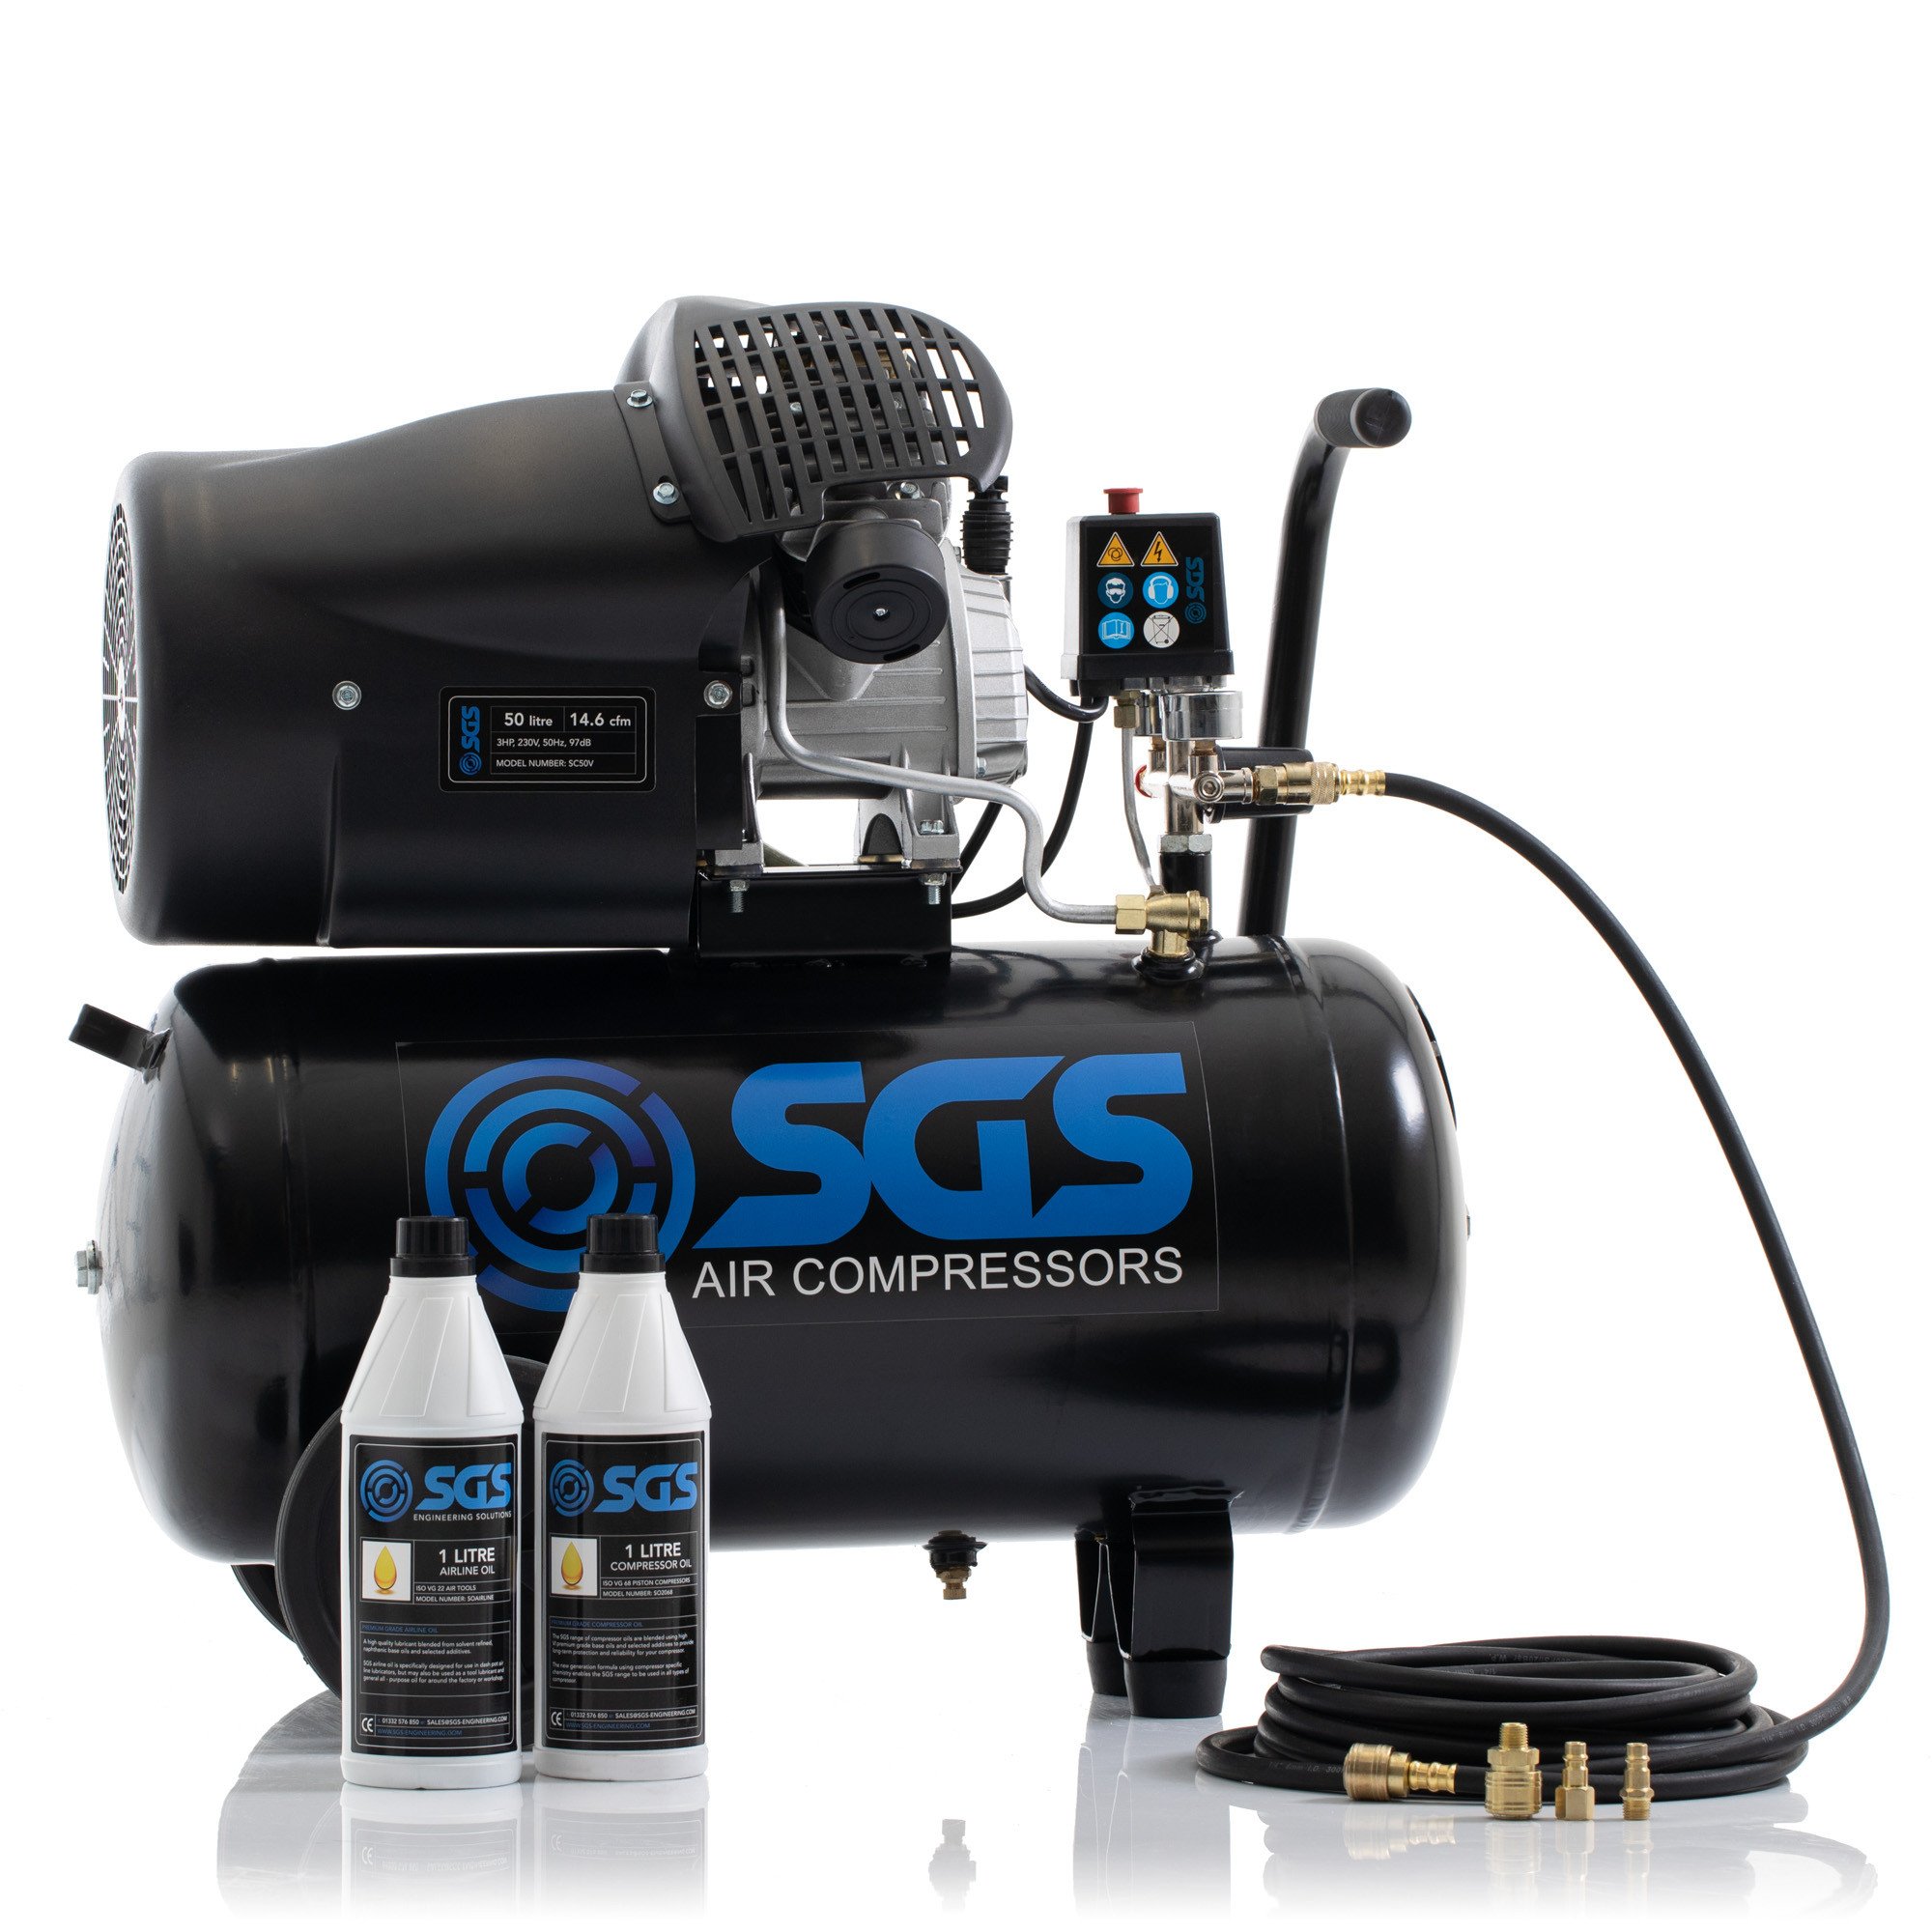 SGS 50升直接驱动空气压缩机带有入门套件-14.6CFM 3.0HP 50L